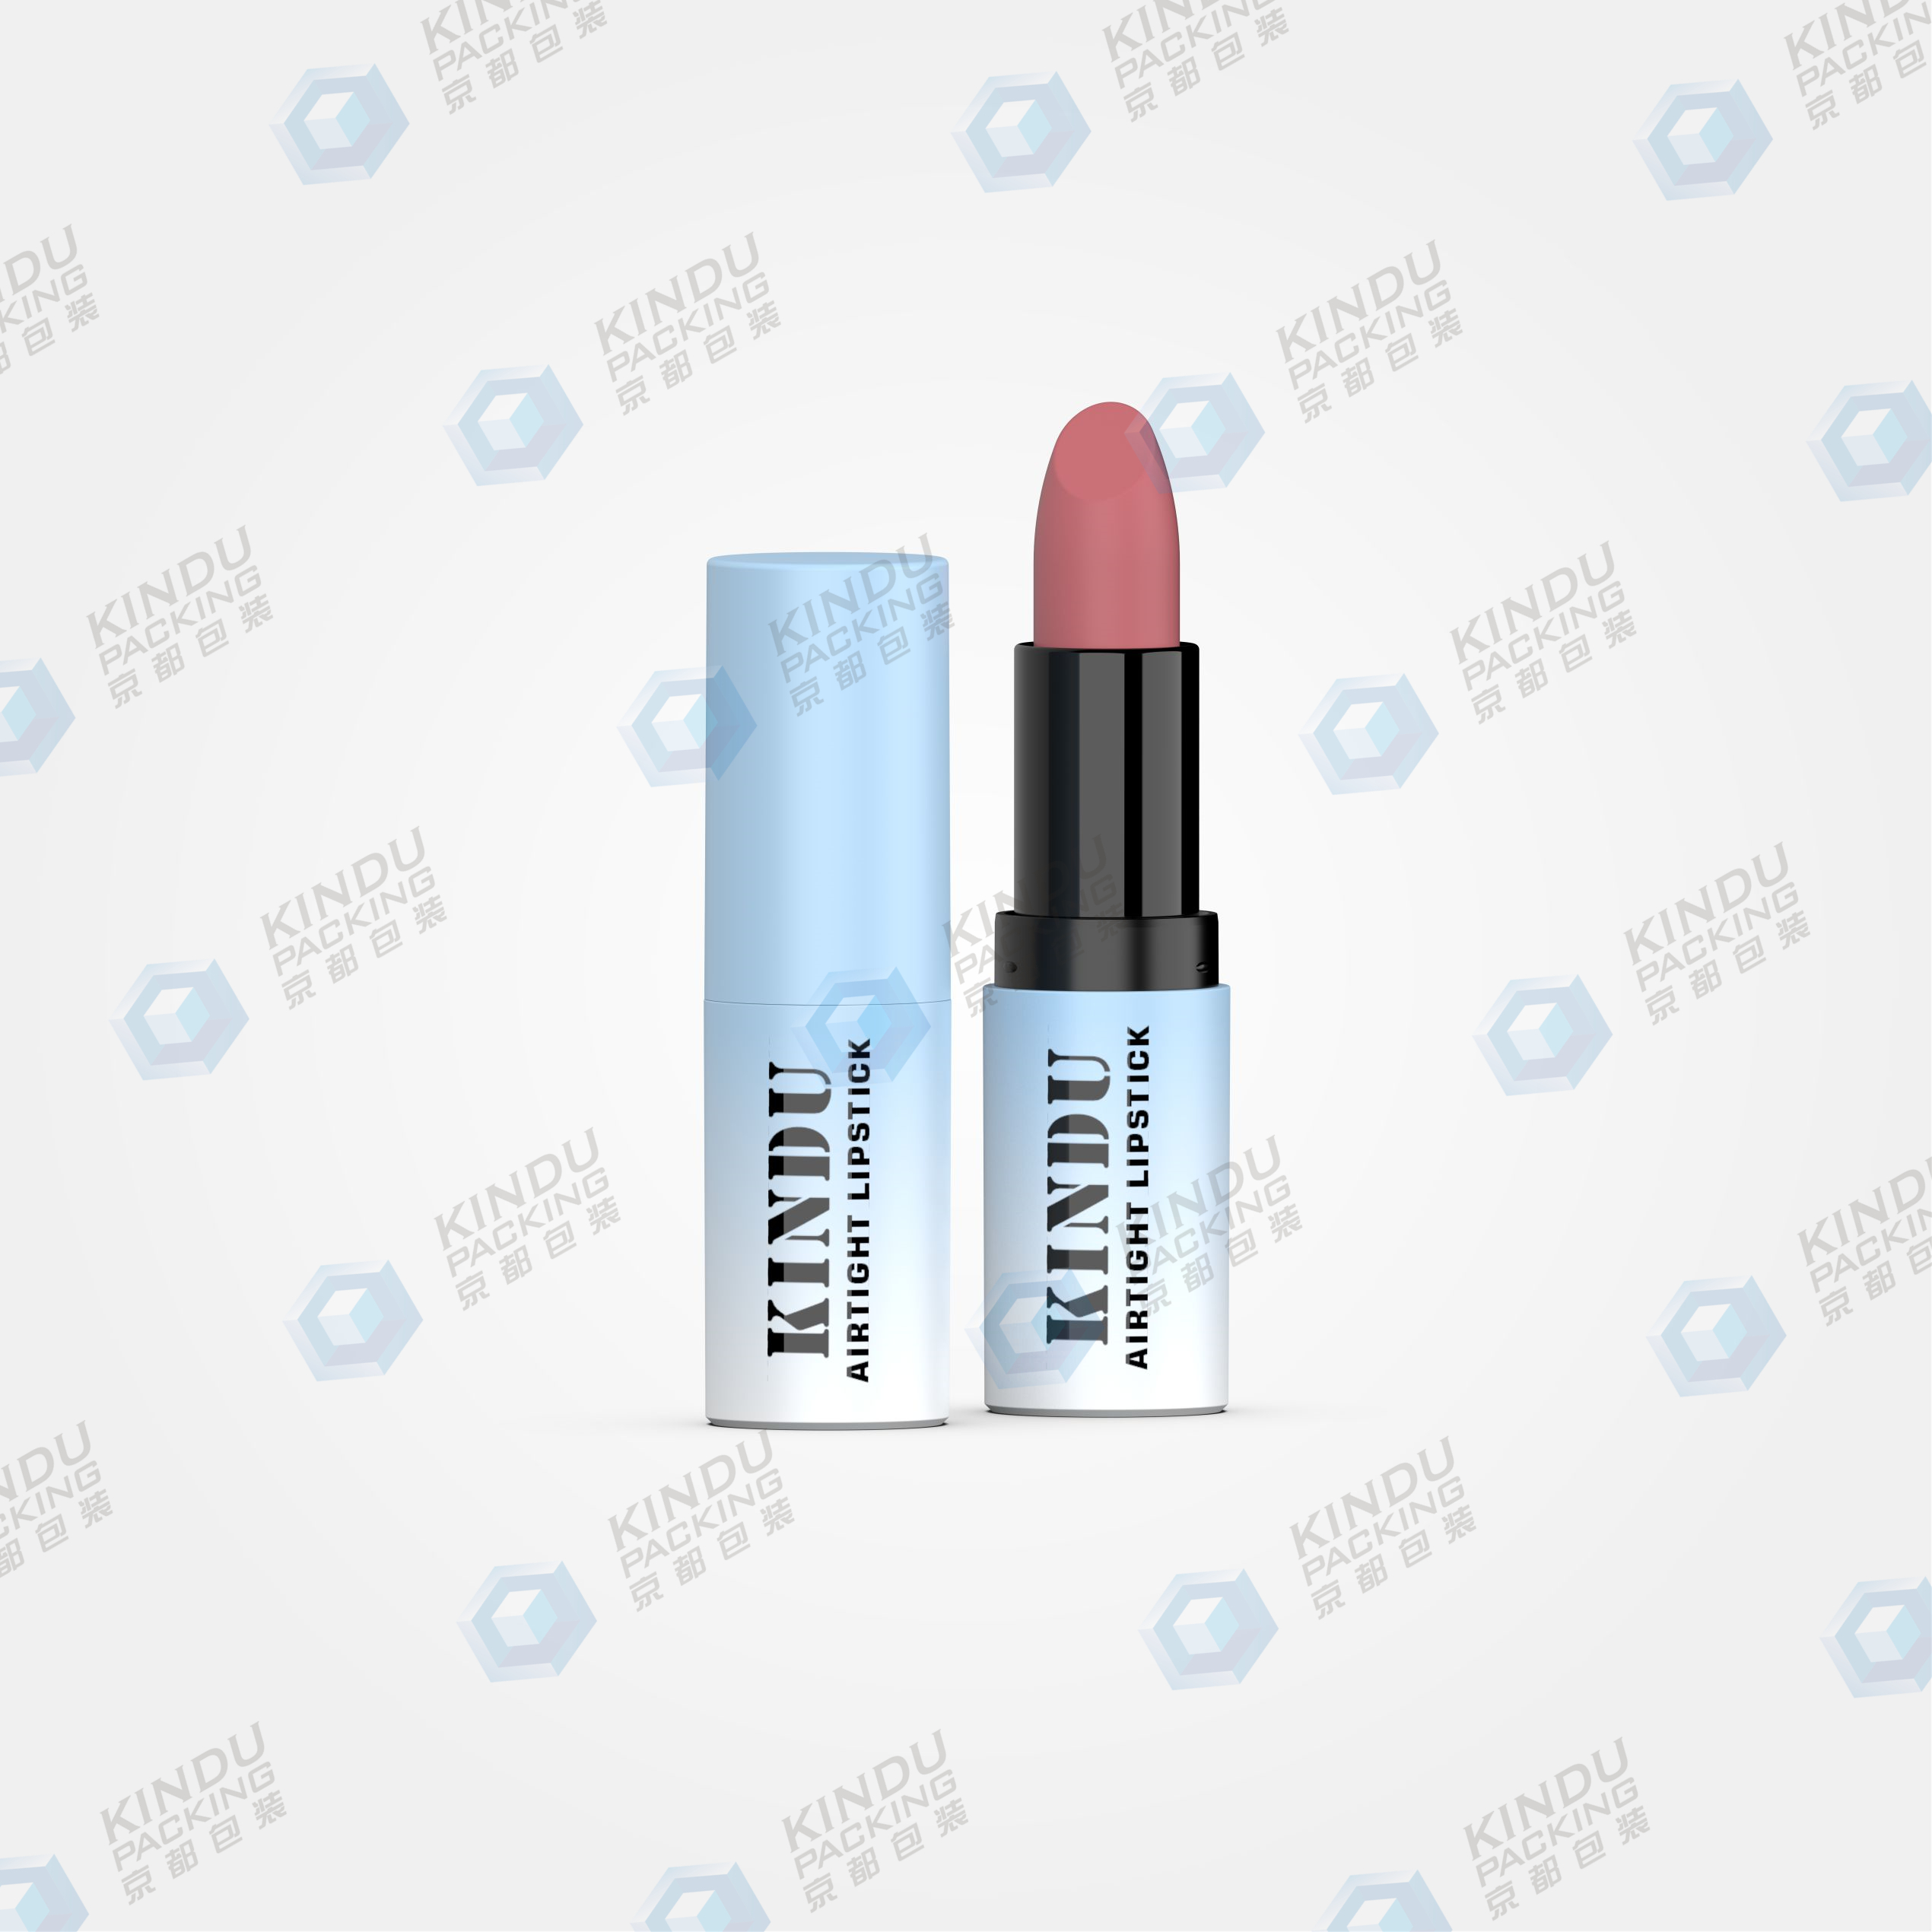 79.00 mm x 22.45 mm Airtight Lipstick Packaging (ZH-K0243)